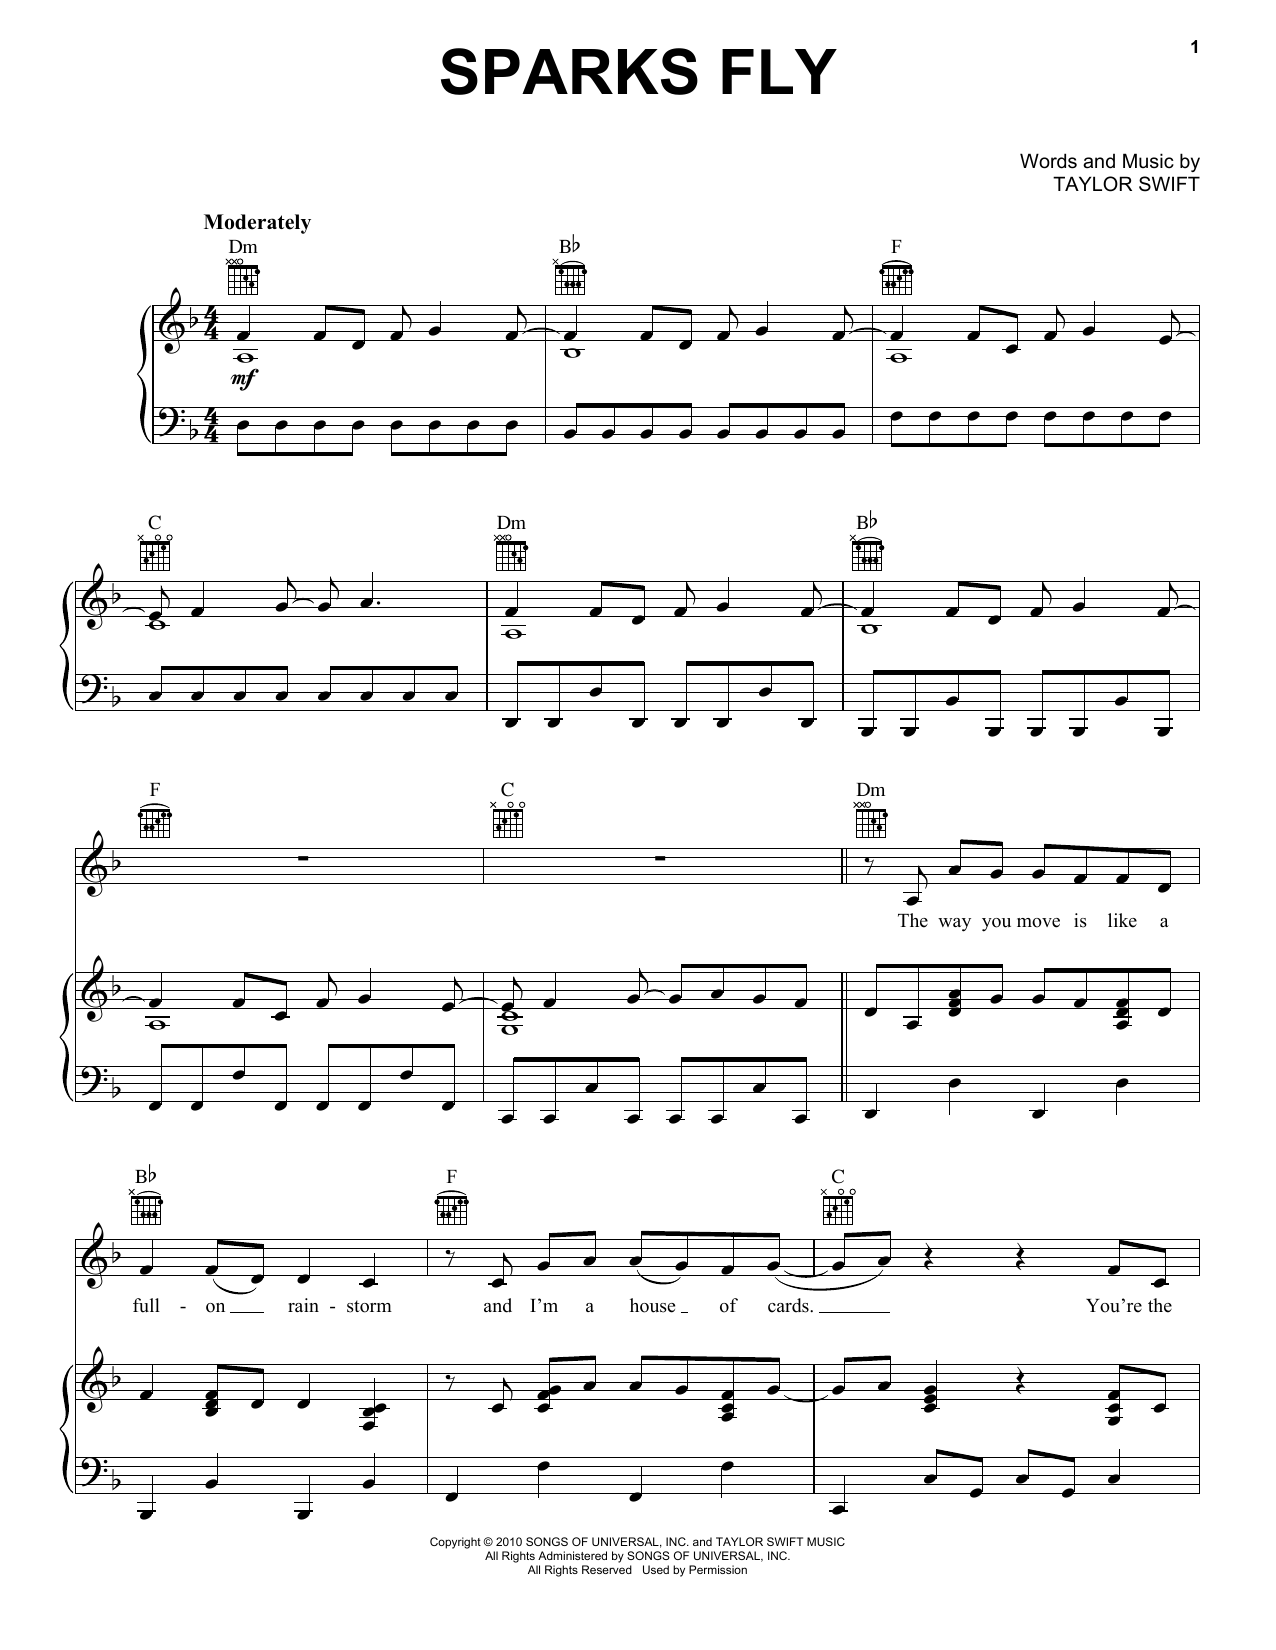 Taylor Swift Sparks Fly Sheet Music Notes & Chords for Ukulele - Download or Print PDF